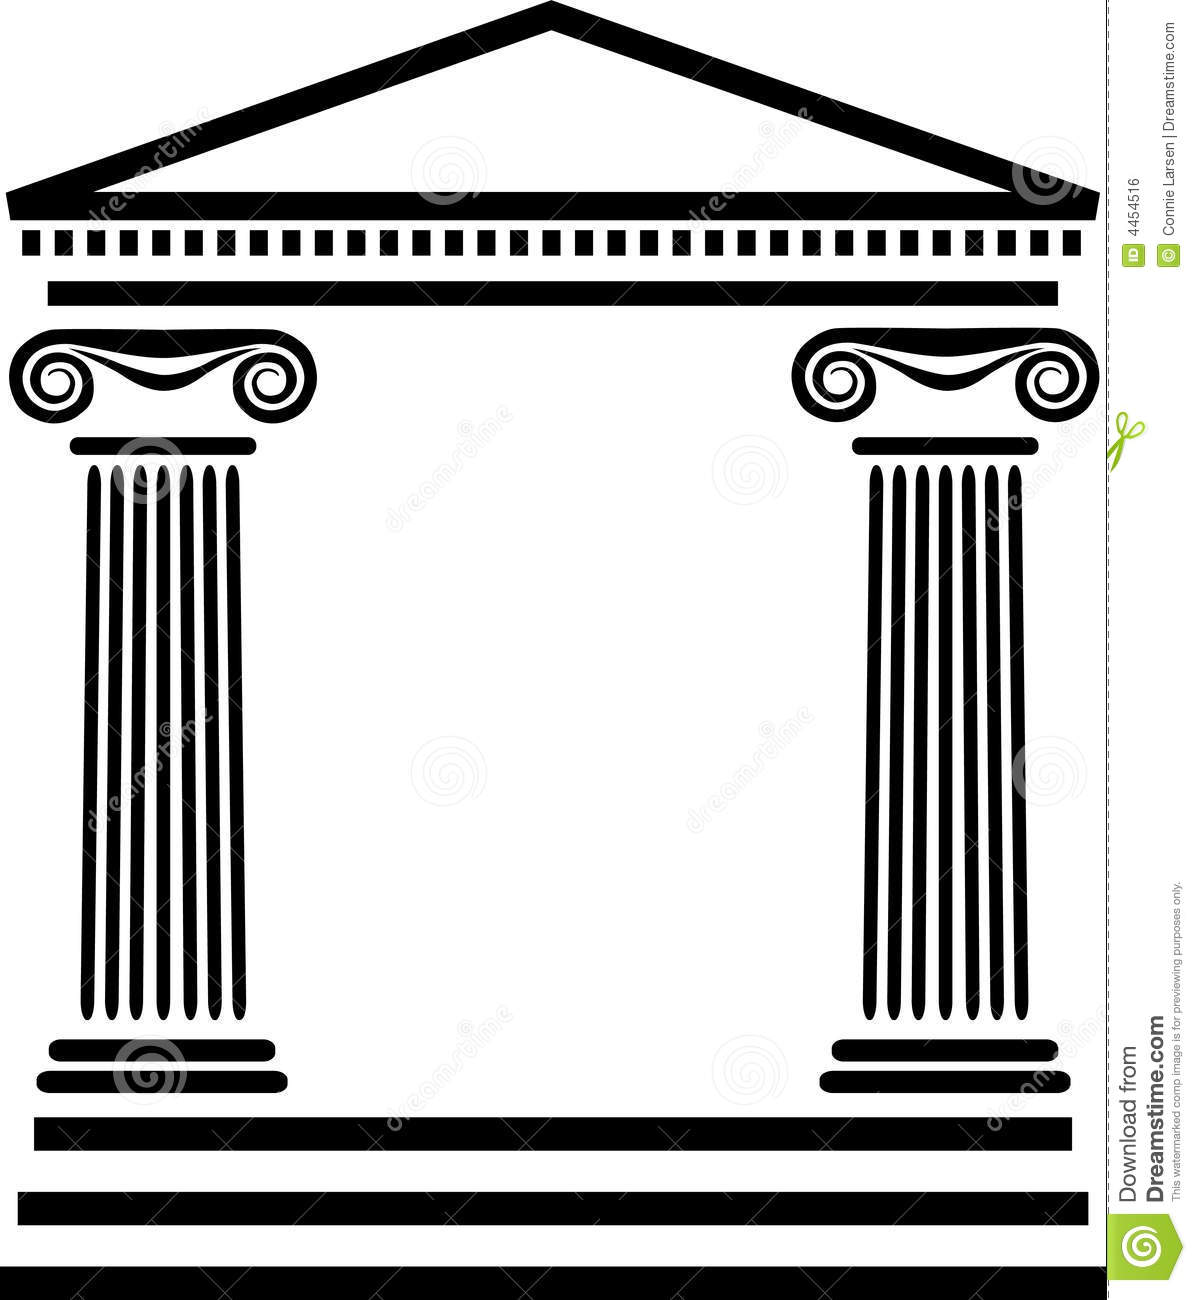 Greek Columns Architecture Eps Royalty Free Stock Image   Image